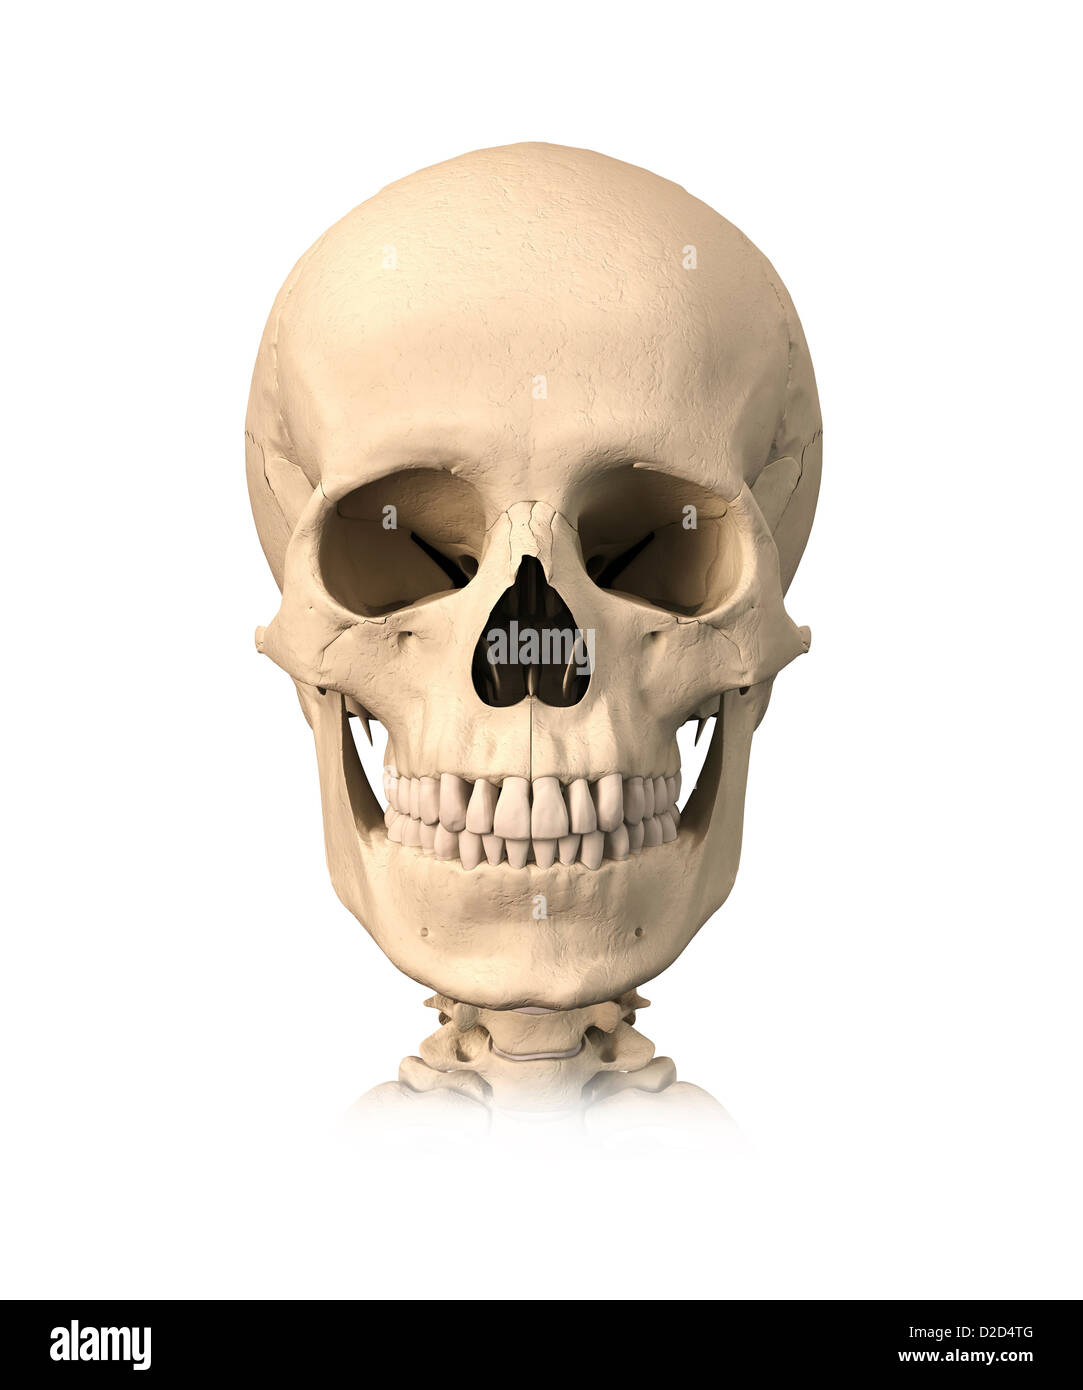 Crâne humain computer artwork Banque D'Images